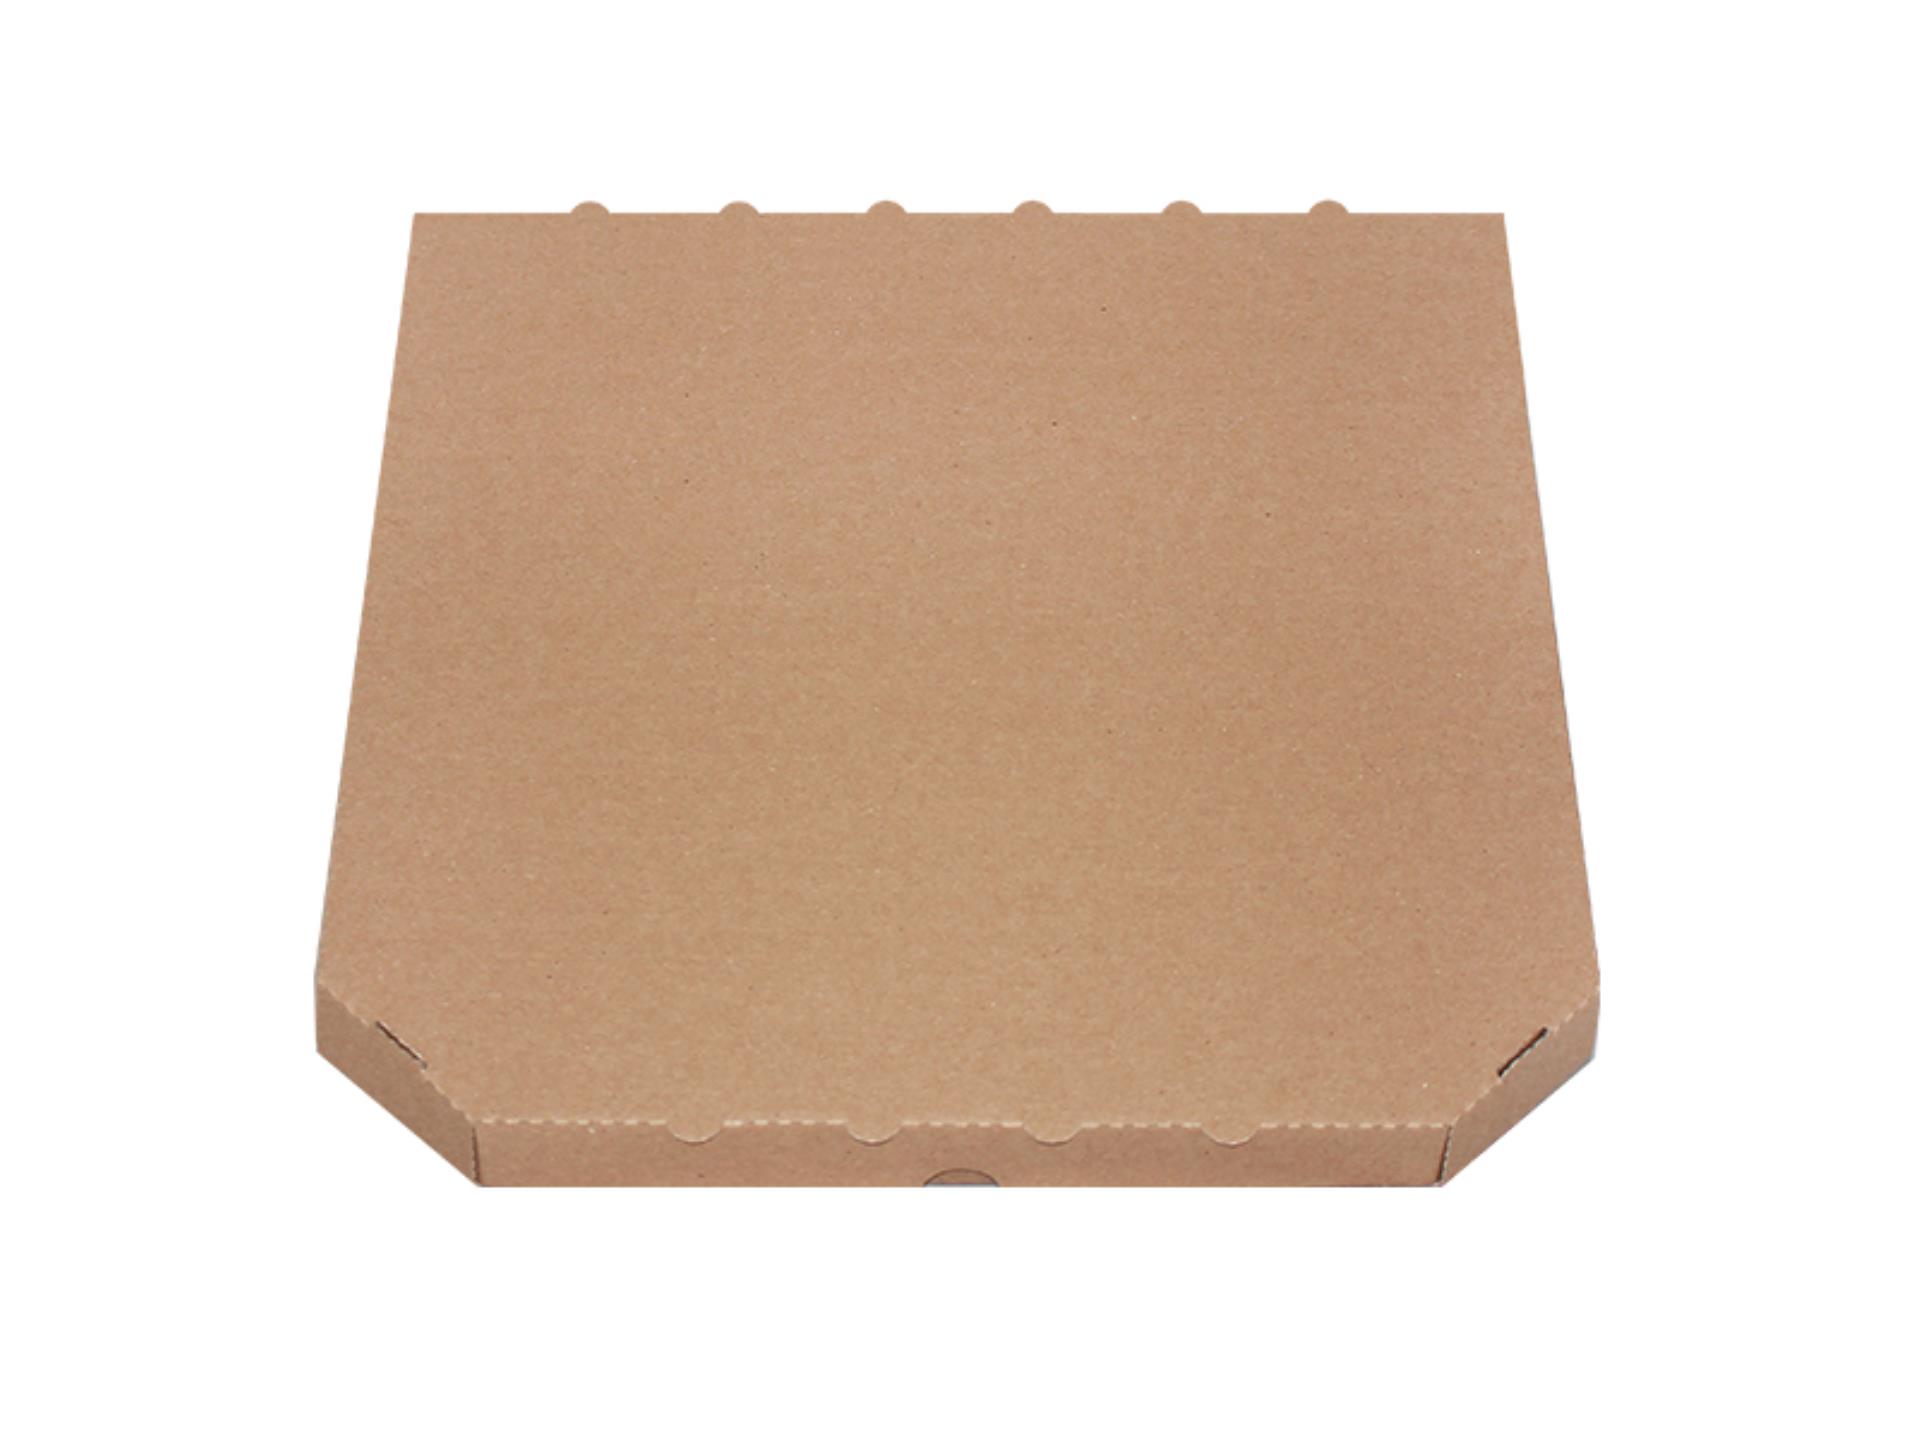 Krabice na pizzu - 32x32x3 cm - 150 ks